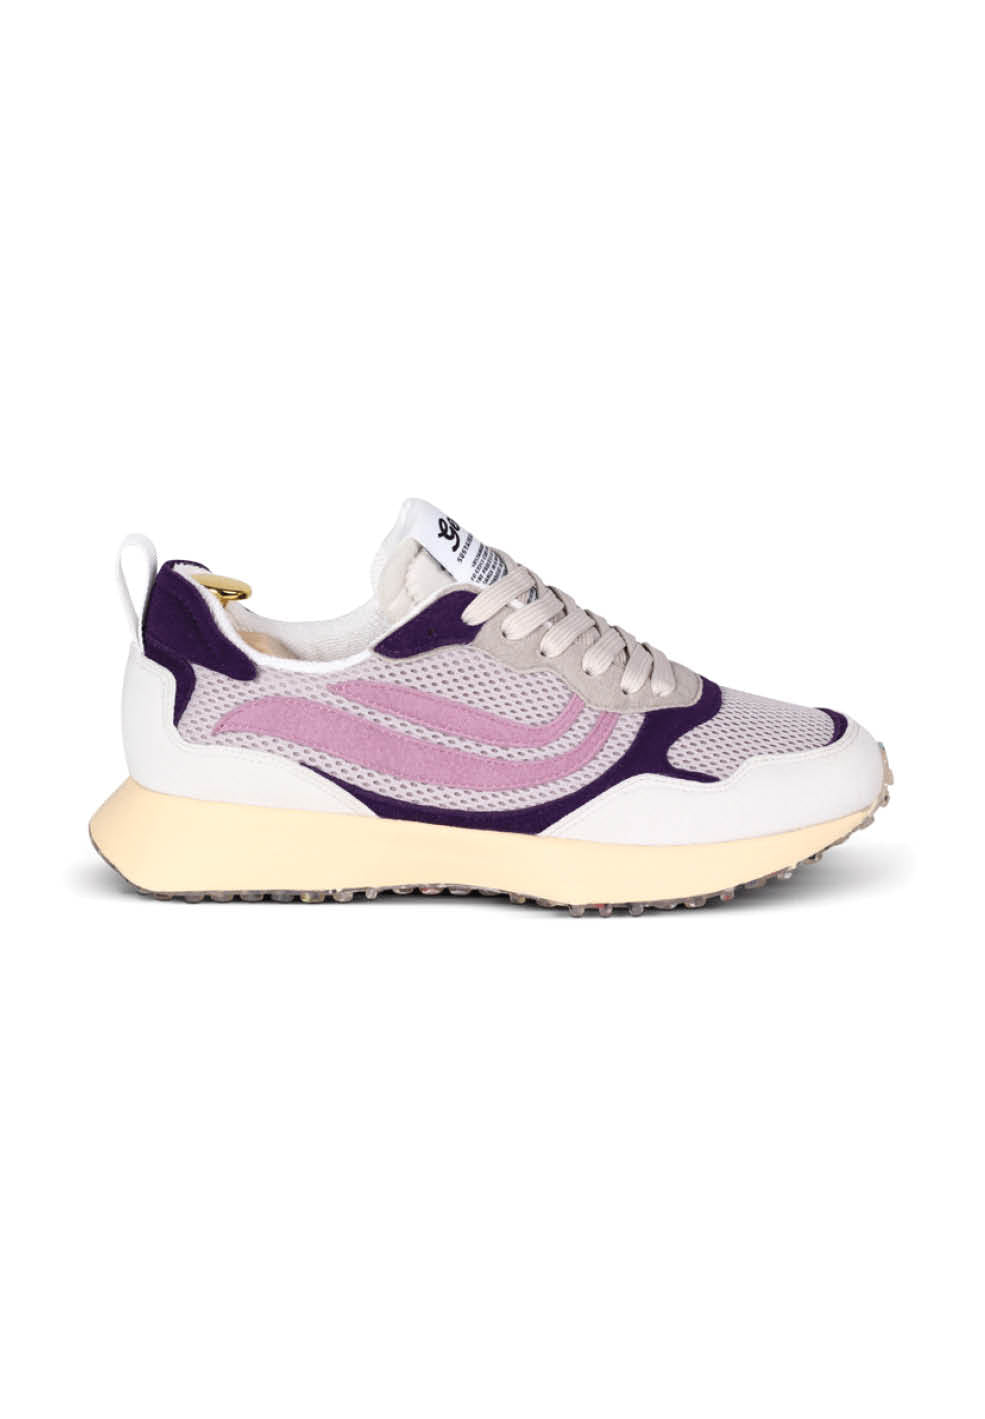 G-marathon sneaker grey-based off-white/purple/lavender